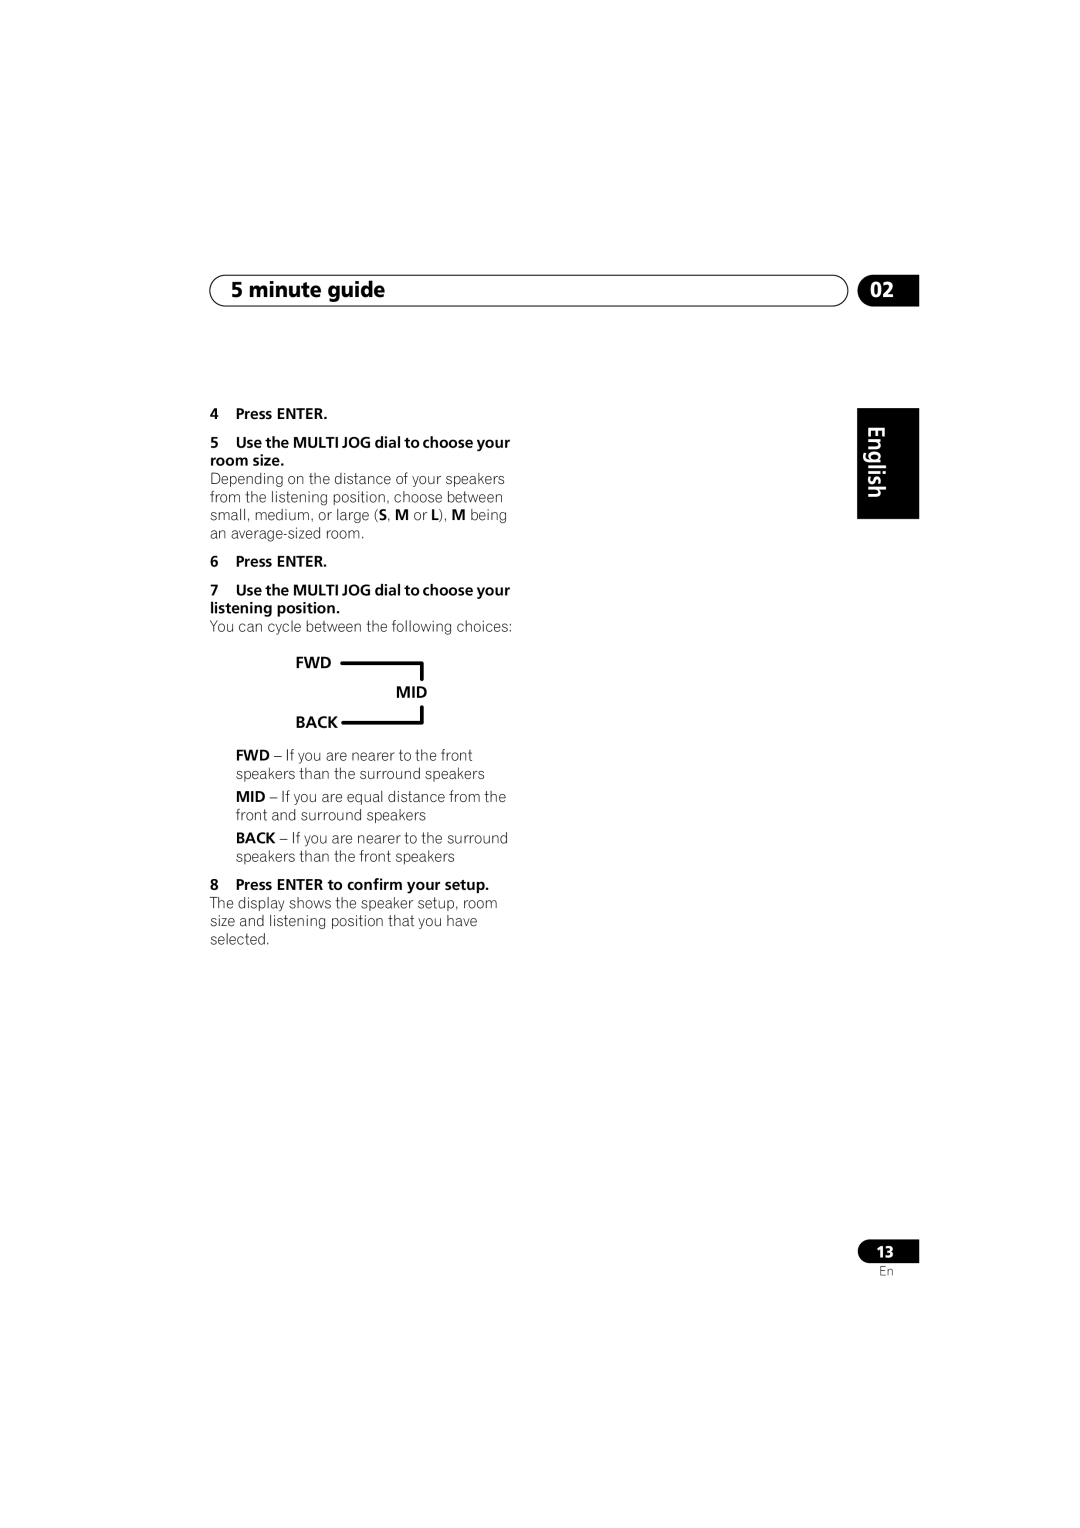 Pioneer VSX-D714, VSX-D514 manual Fwd Mid Back, minute guide 